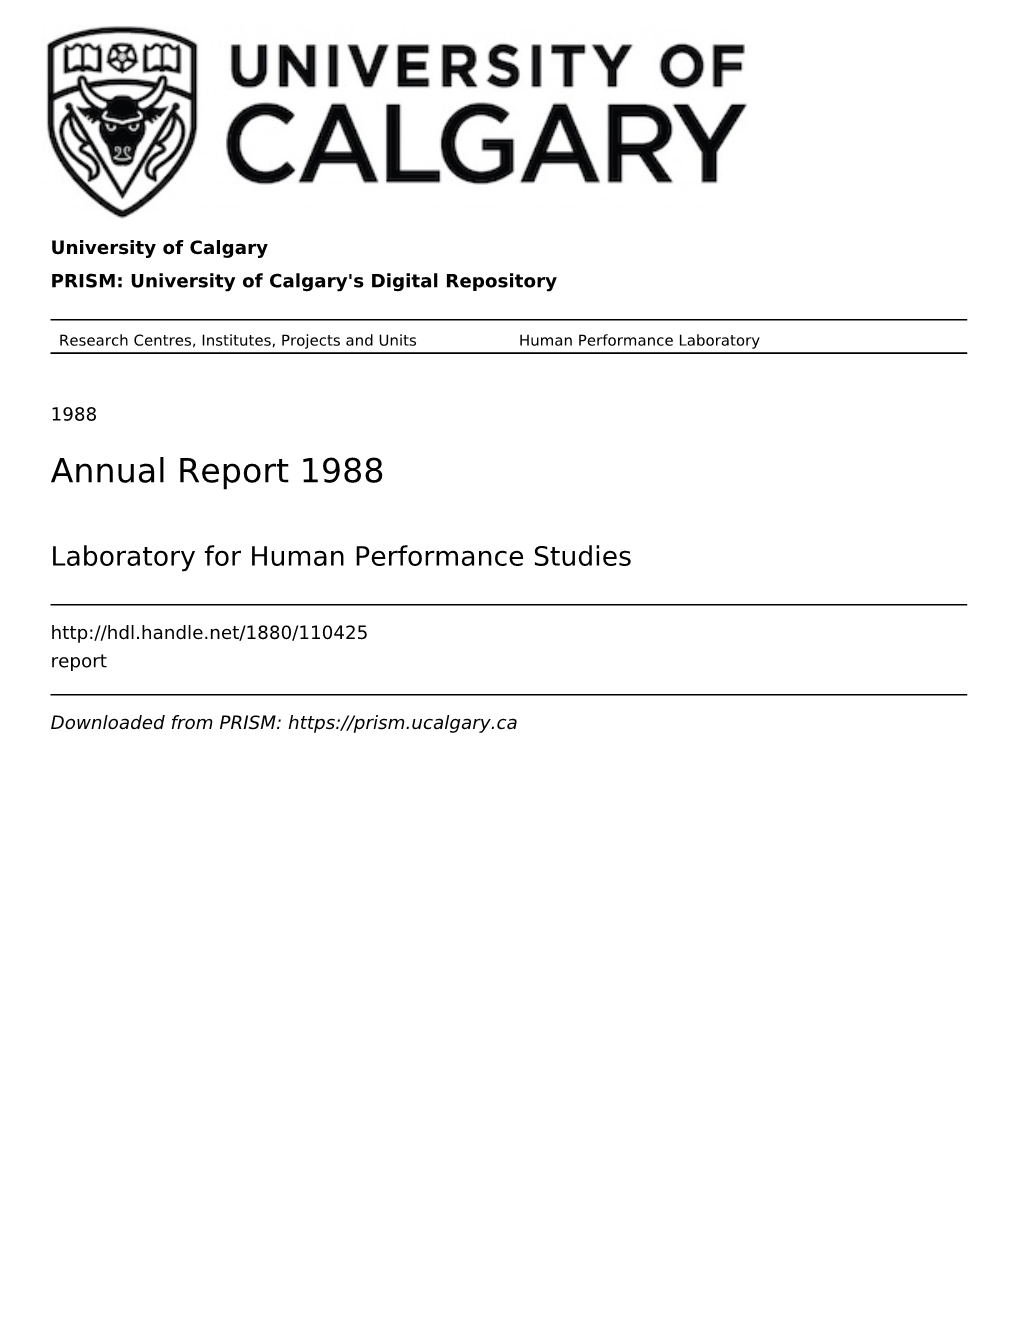 Annual Report 1988